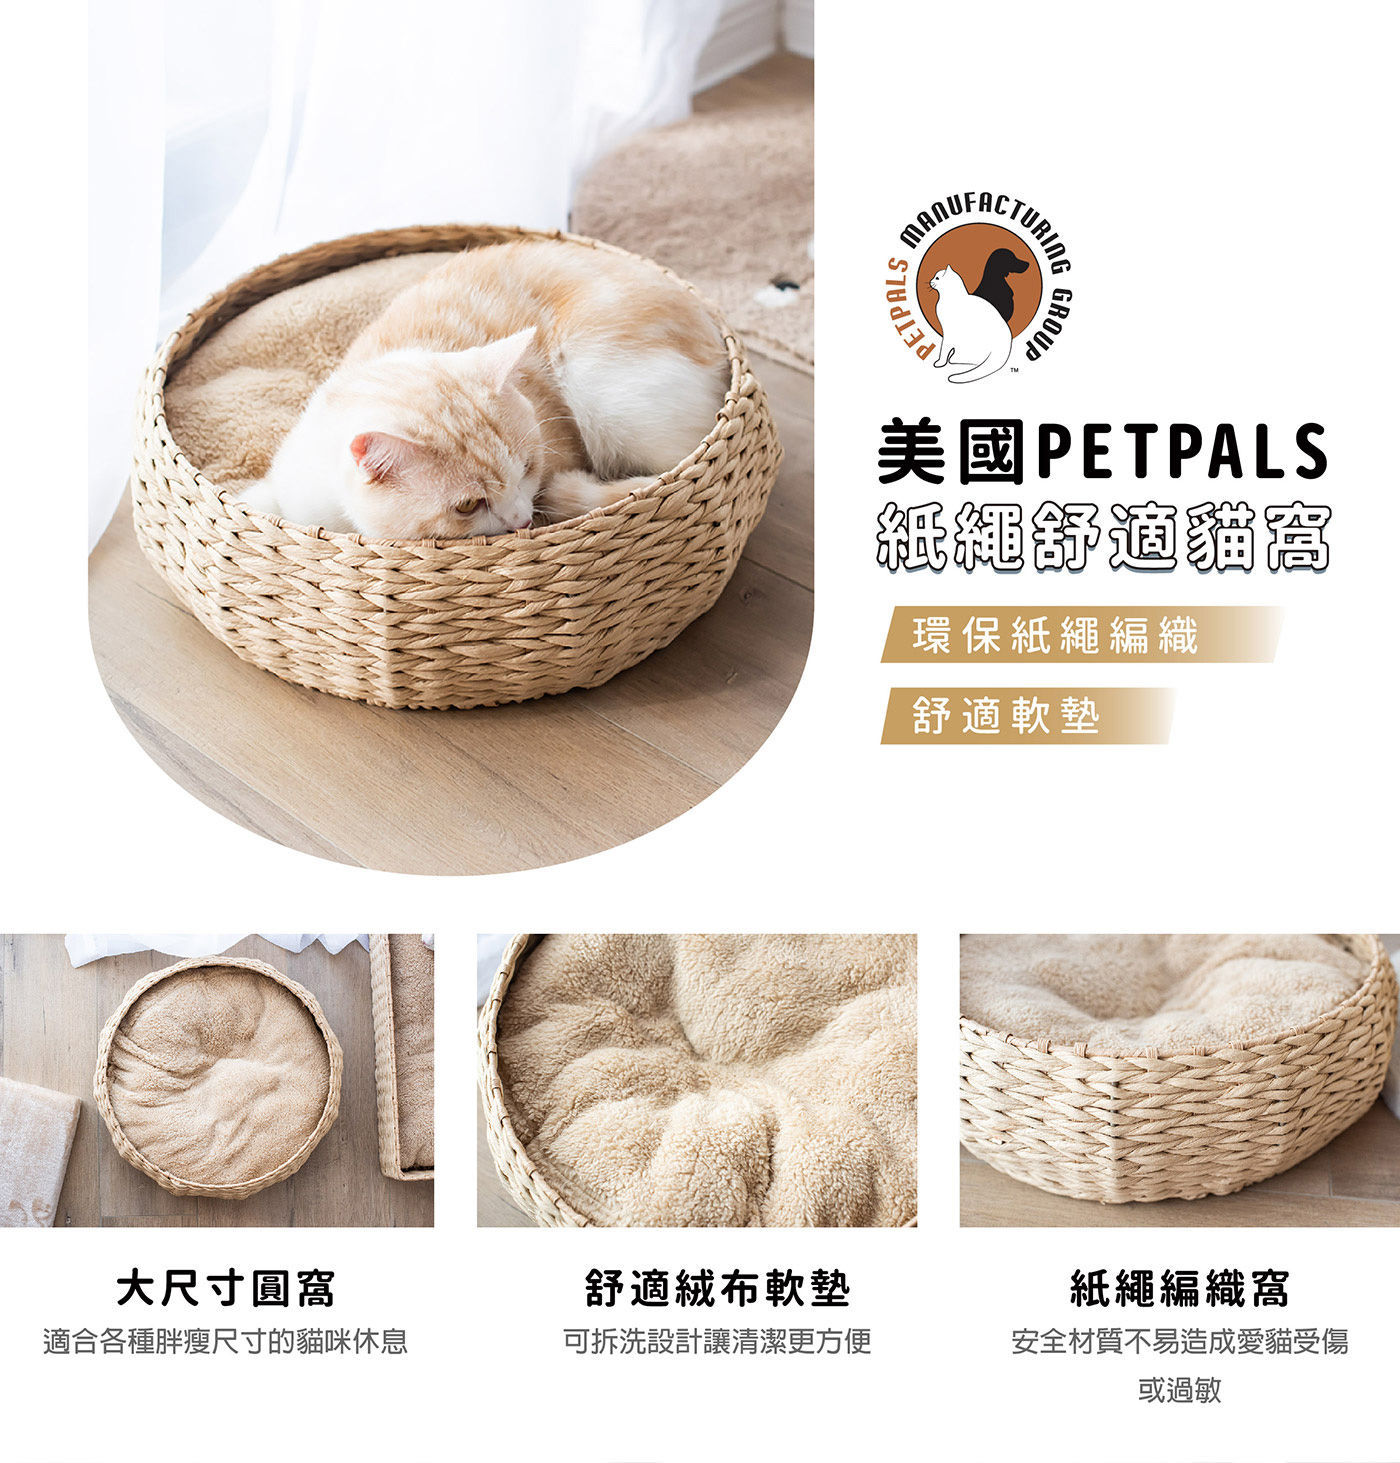 PetPals 紙繩編織圓型貓窩 大尺寸圓窩 舒適絨布軟墊 可拆清洗更方便 使用紙繩編織 不易造成過敏 